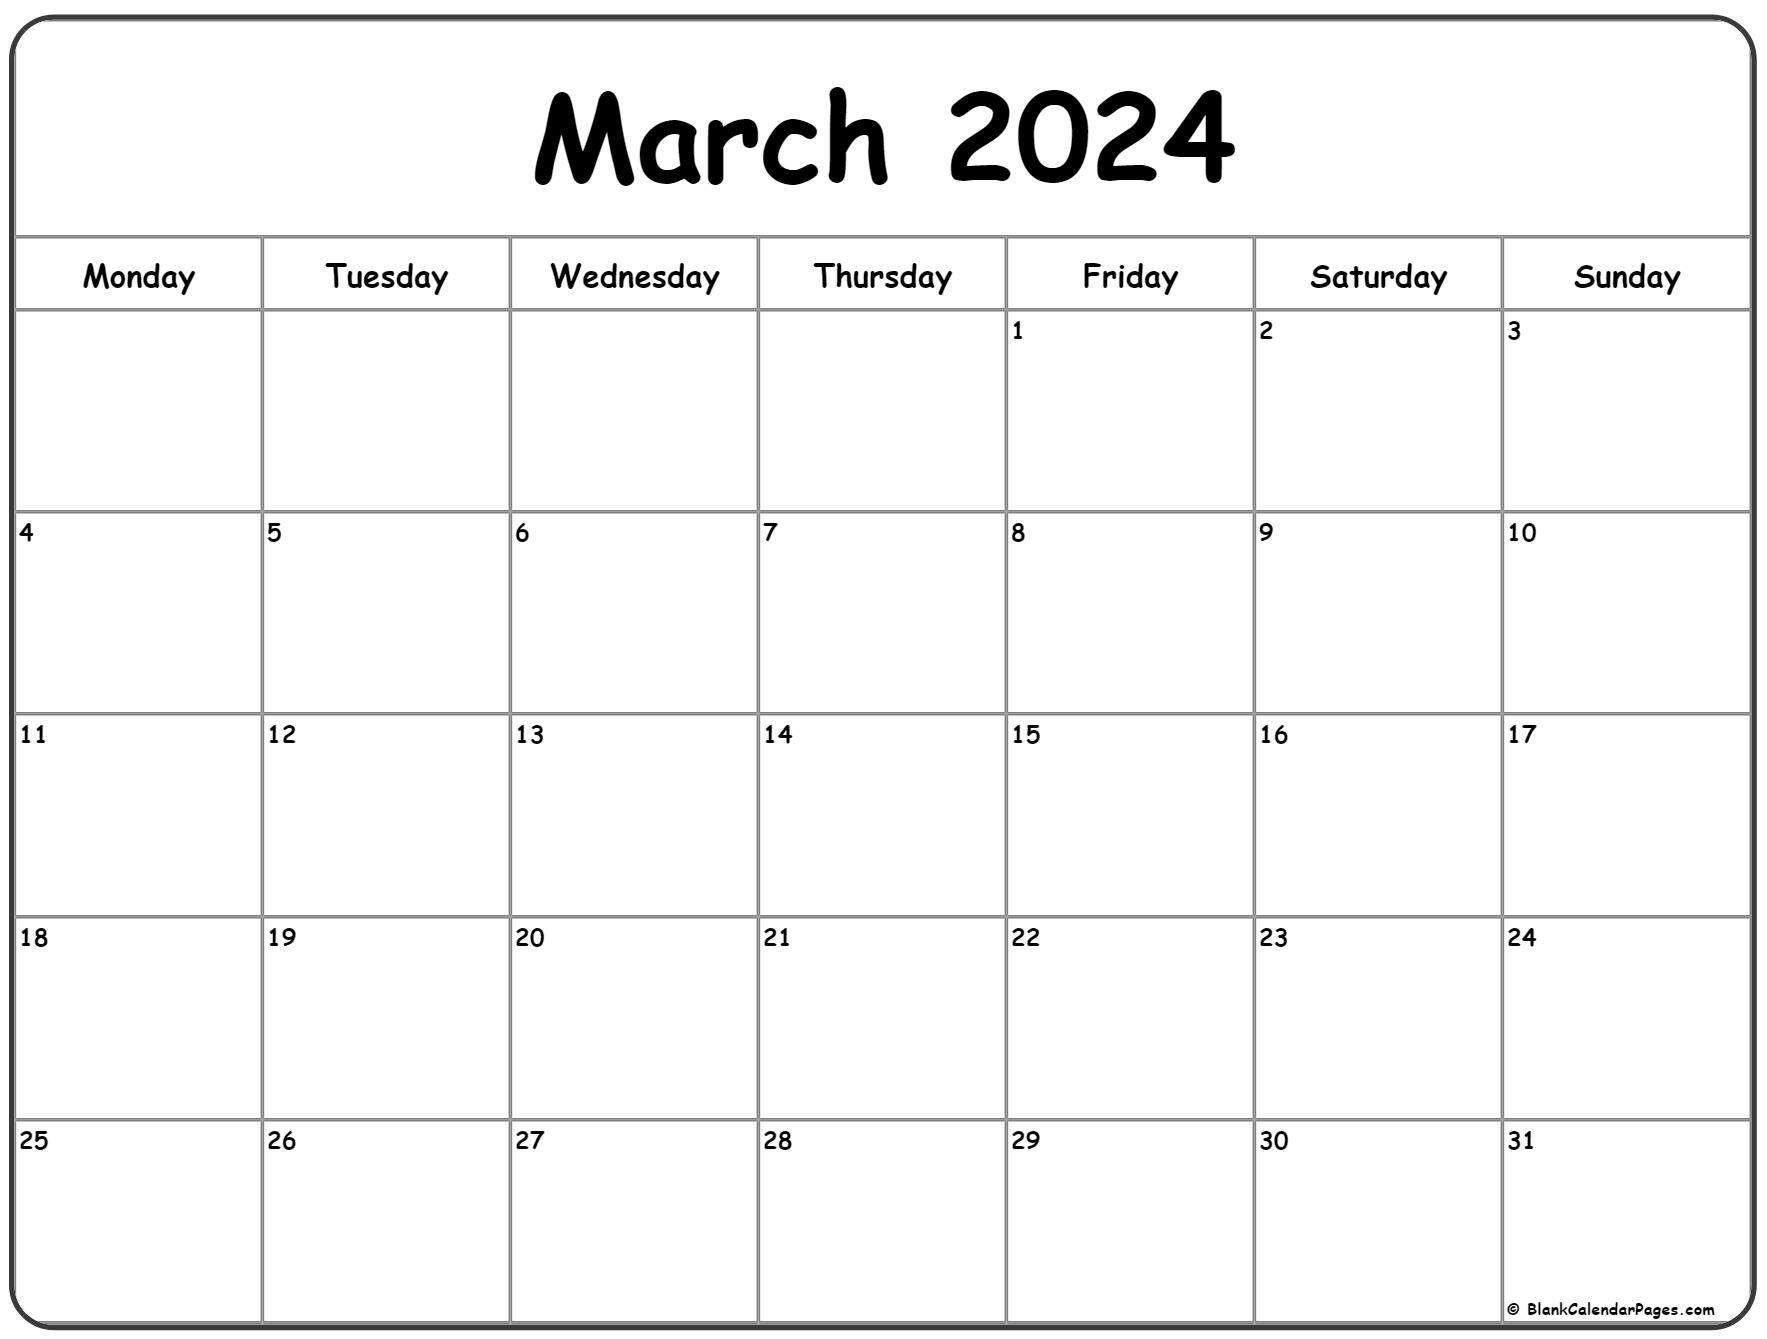 March 2024 Monday Calendar | Monday To Sunday for Printable March 2024 Calendar